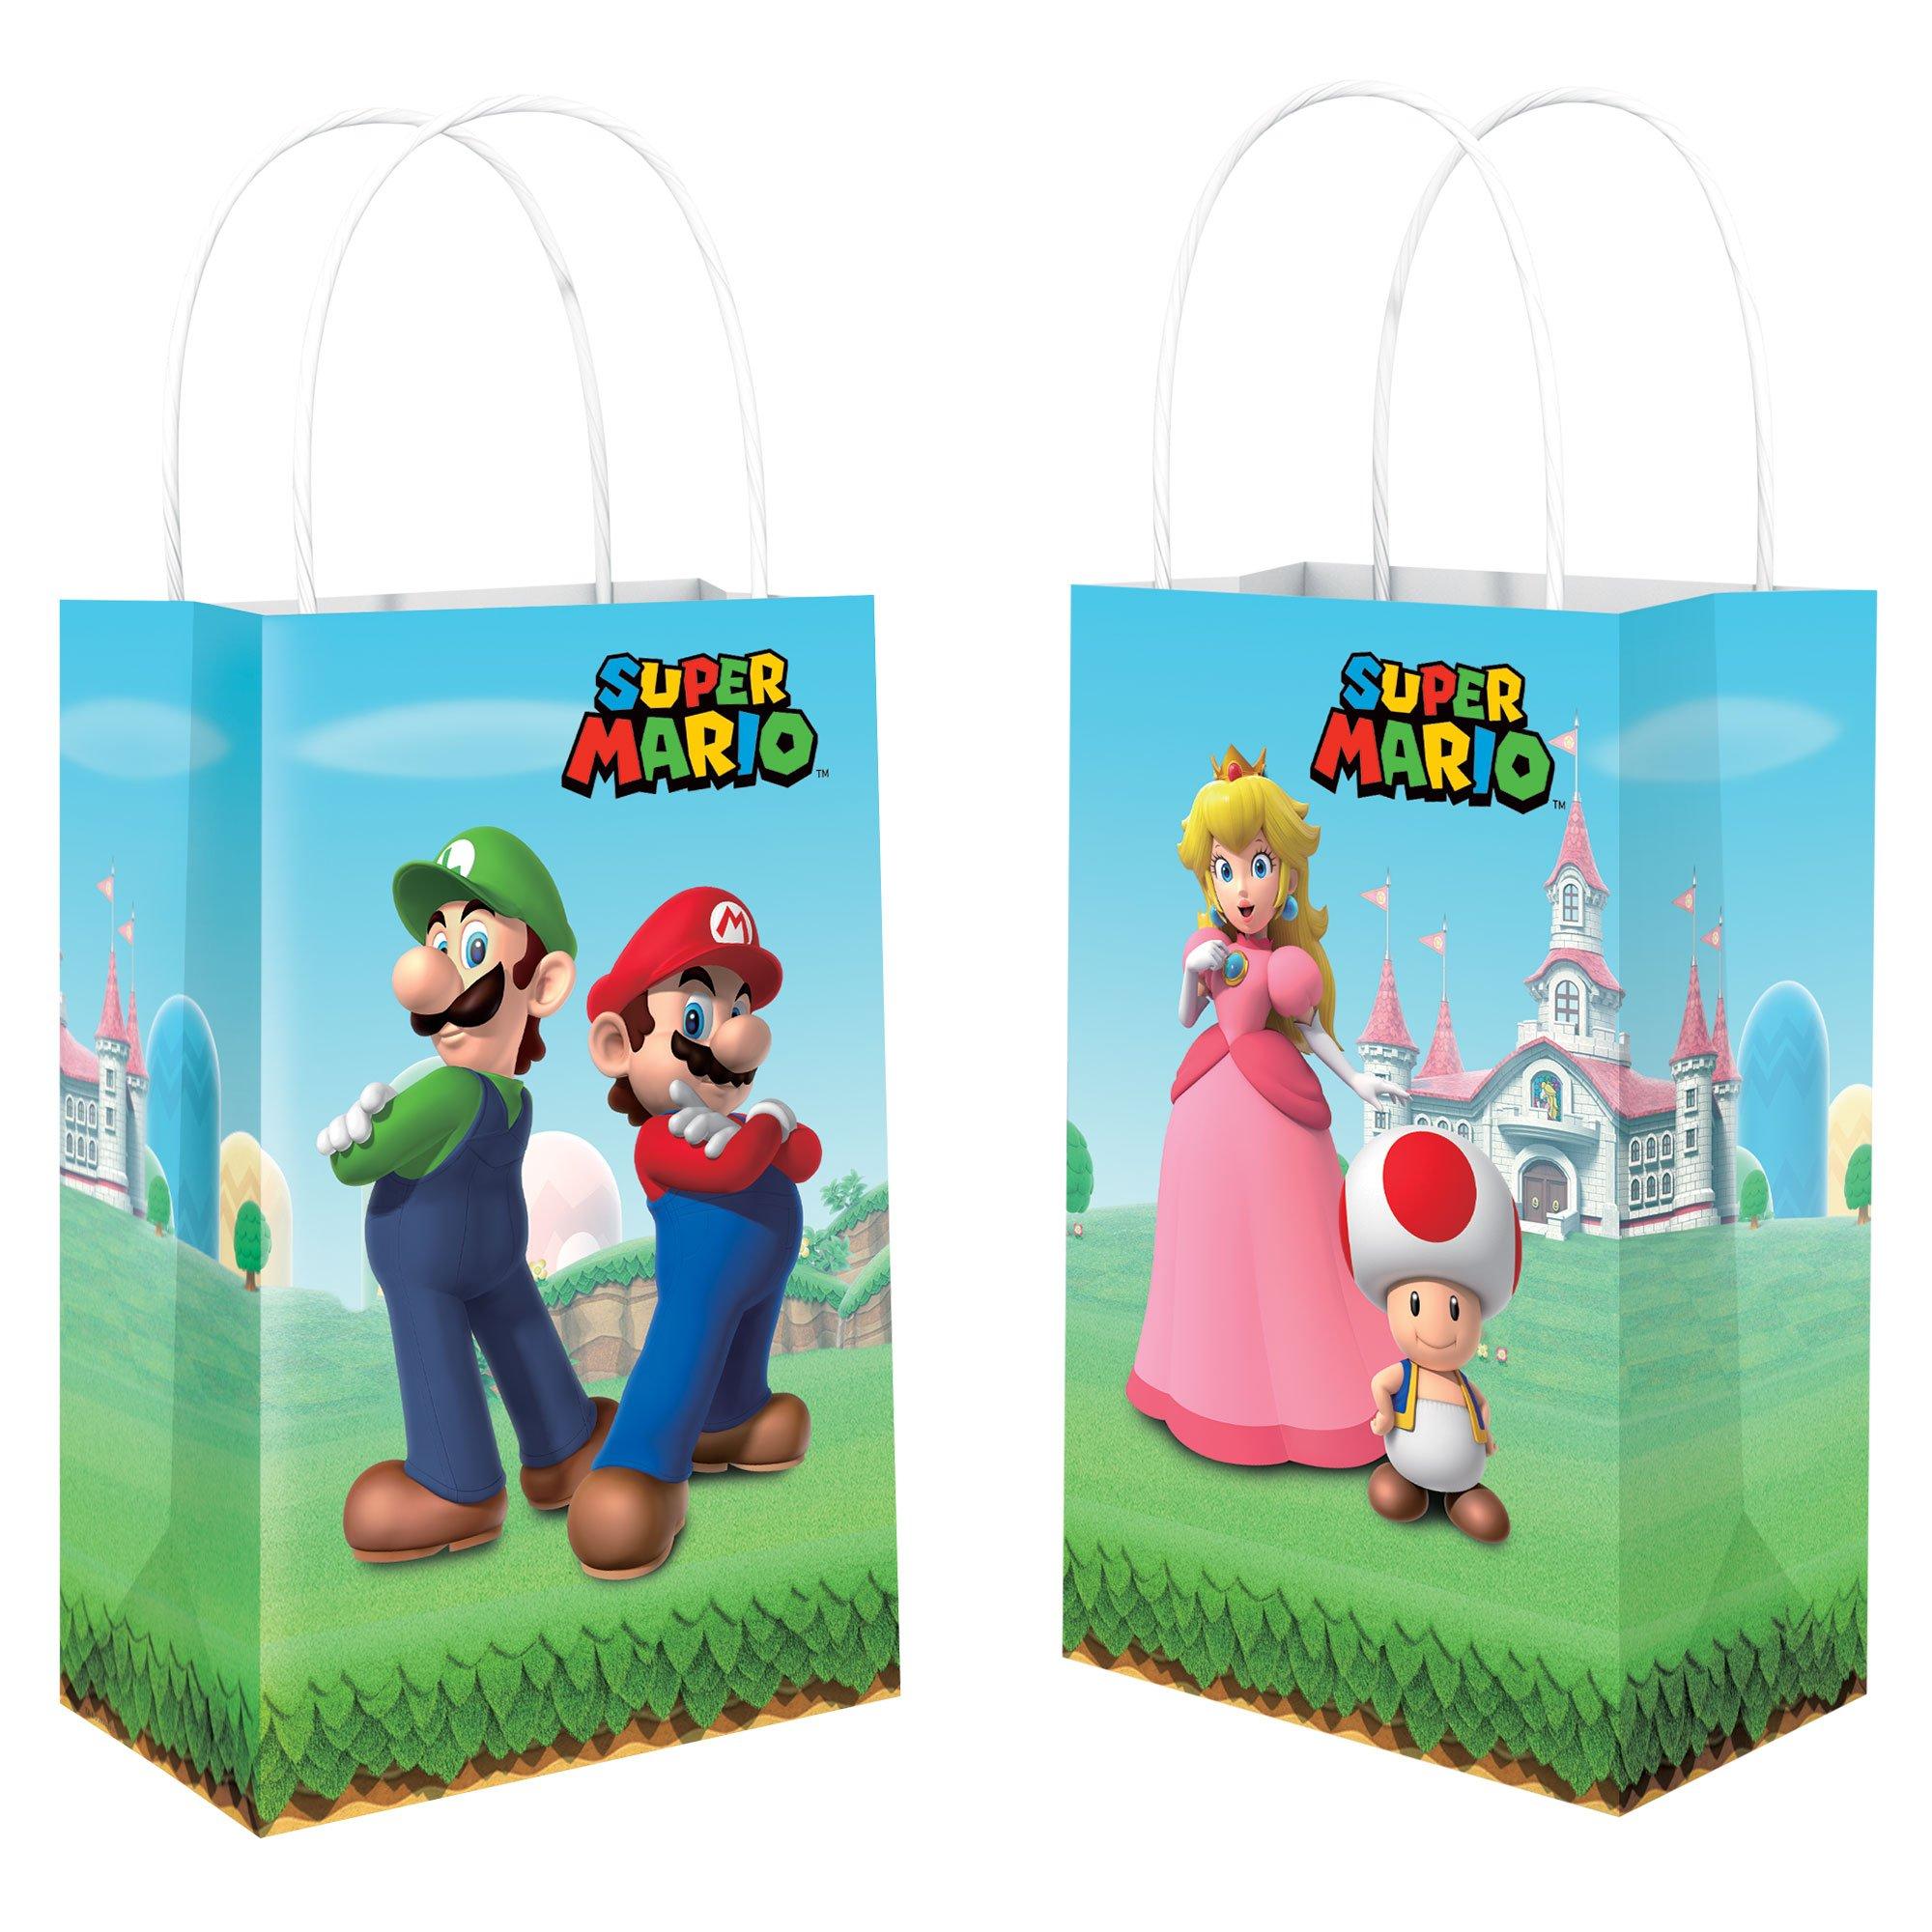 Super Mario Party Supplies, Mario Party Bags